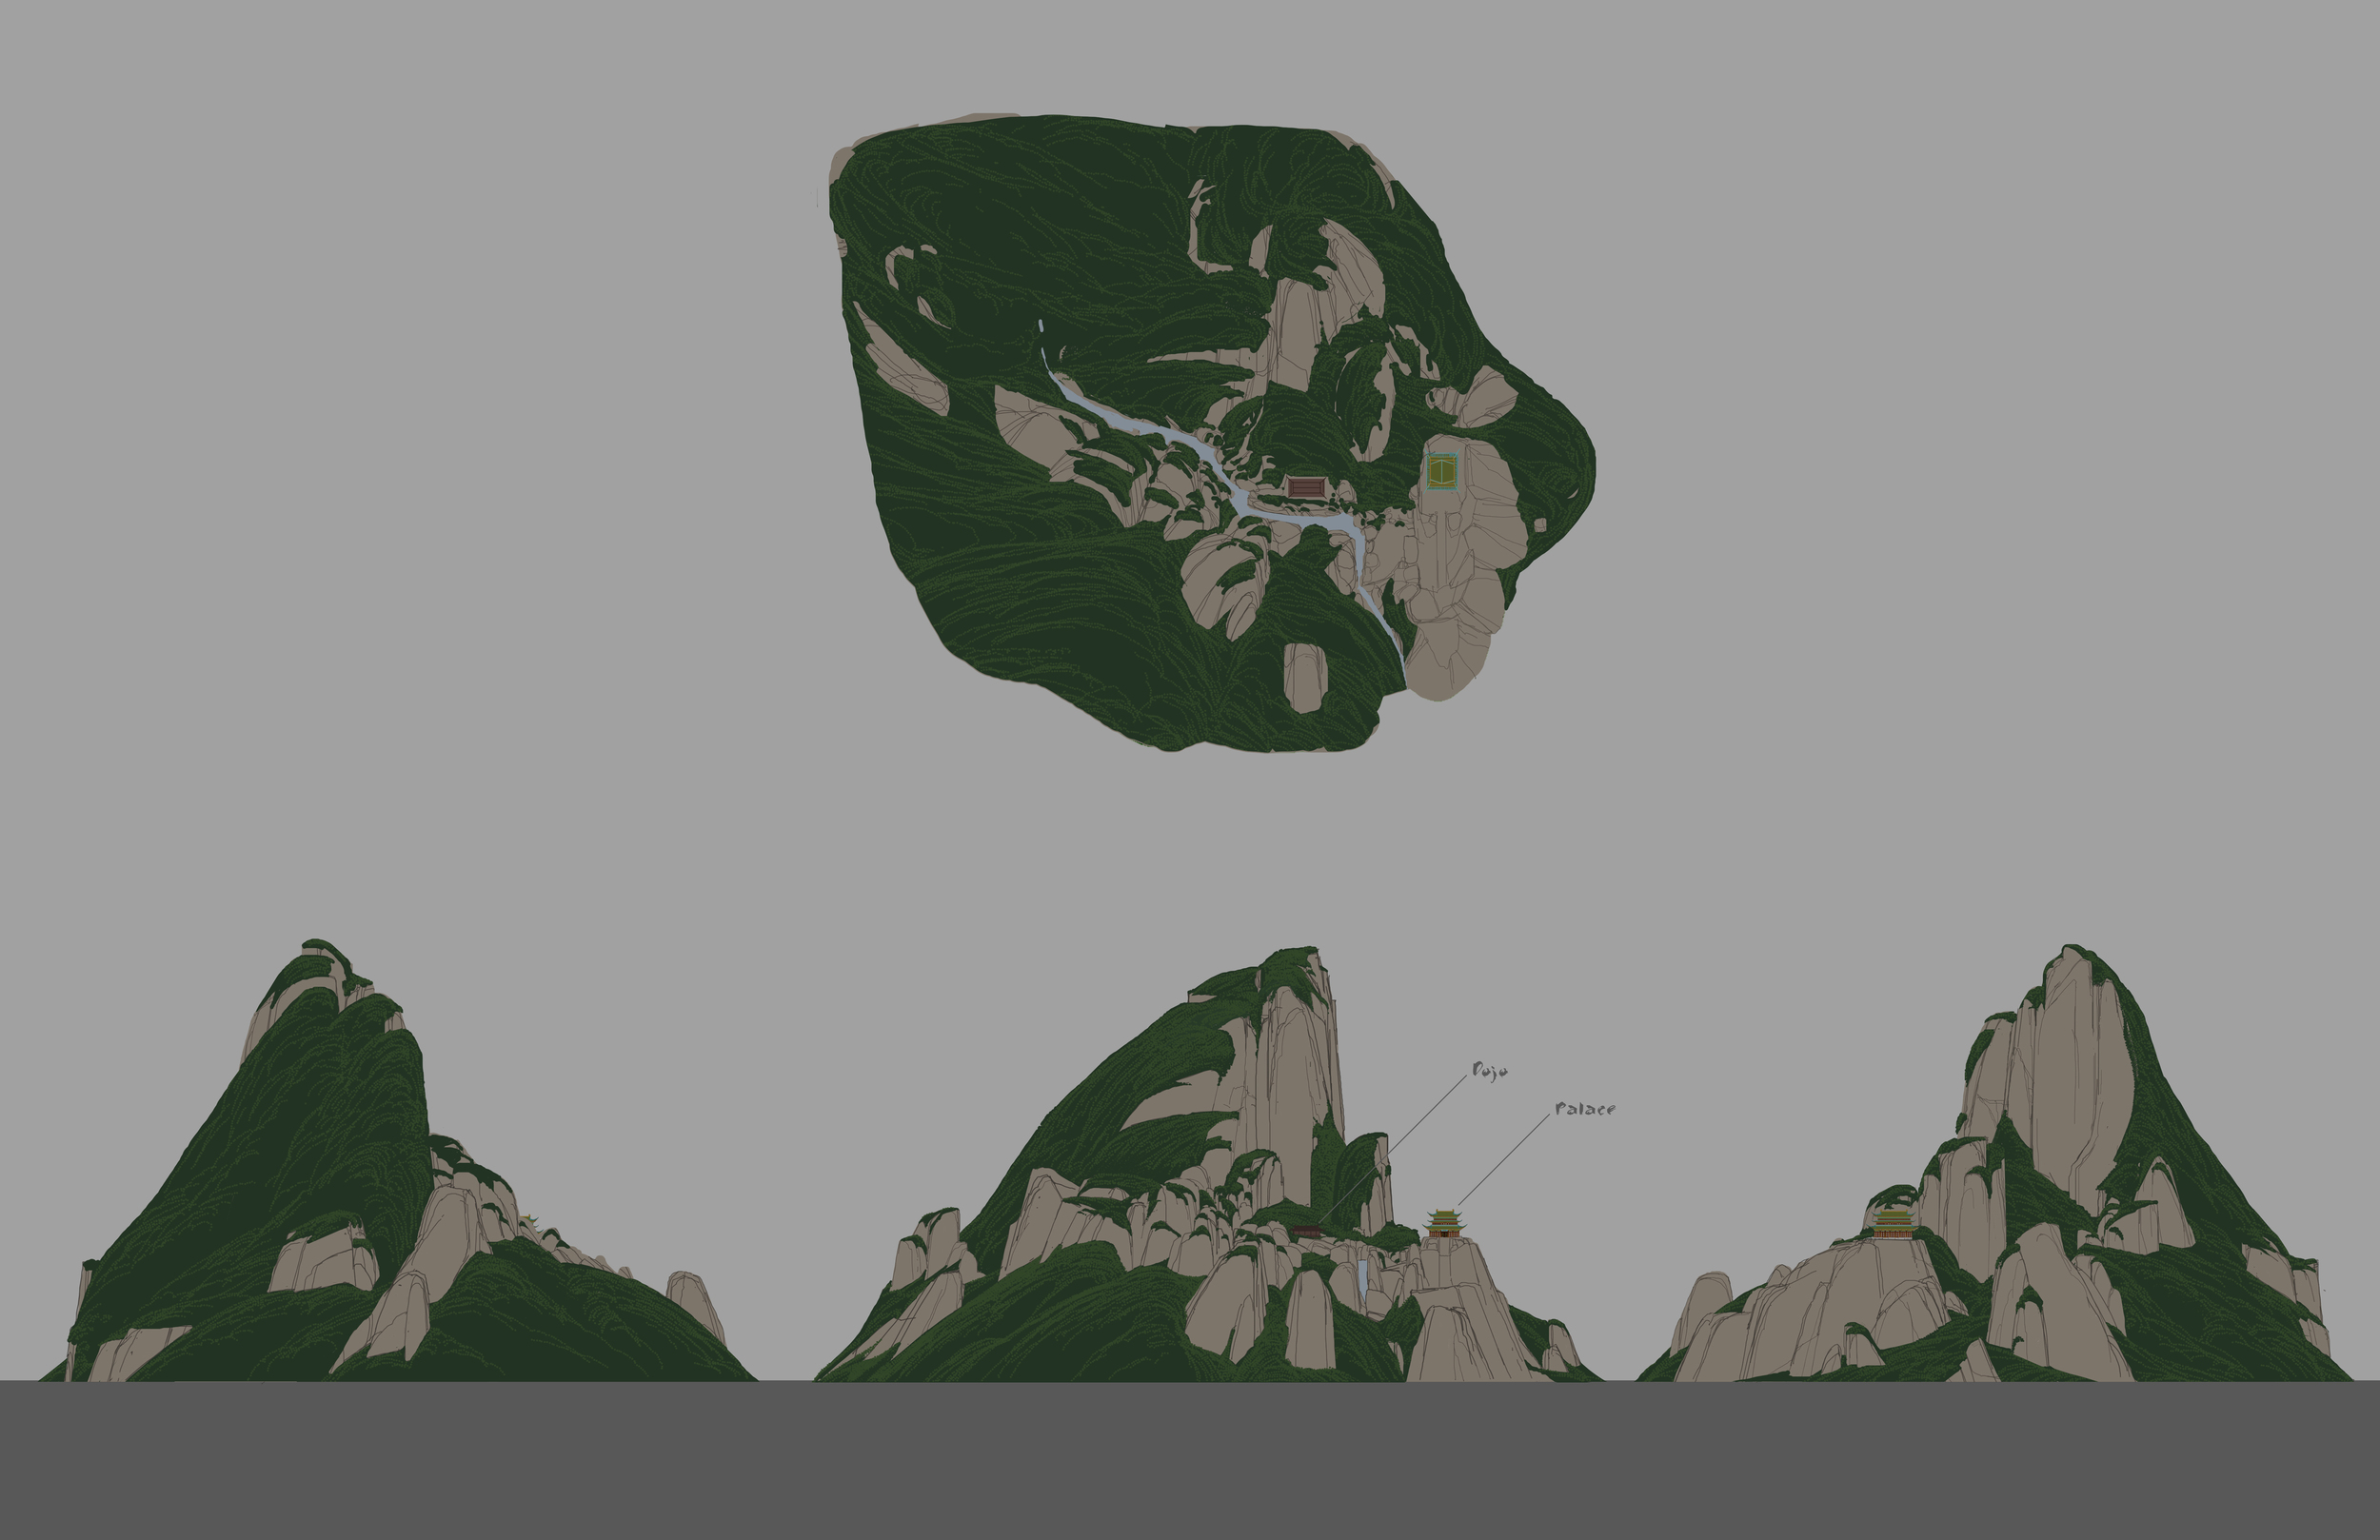  Kung Fu Panda, DWA Jade Mountain design - Orthographic view    